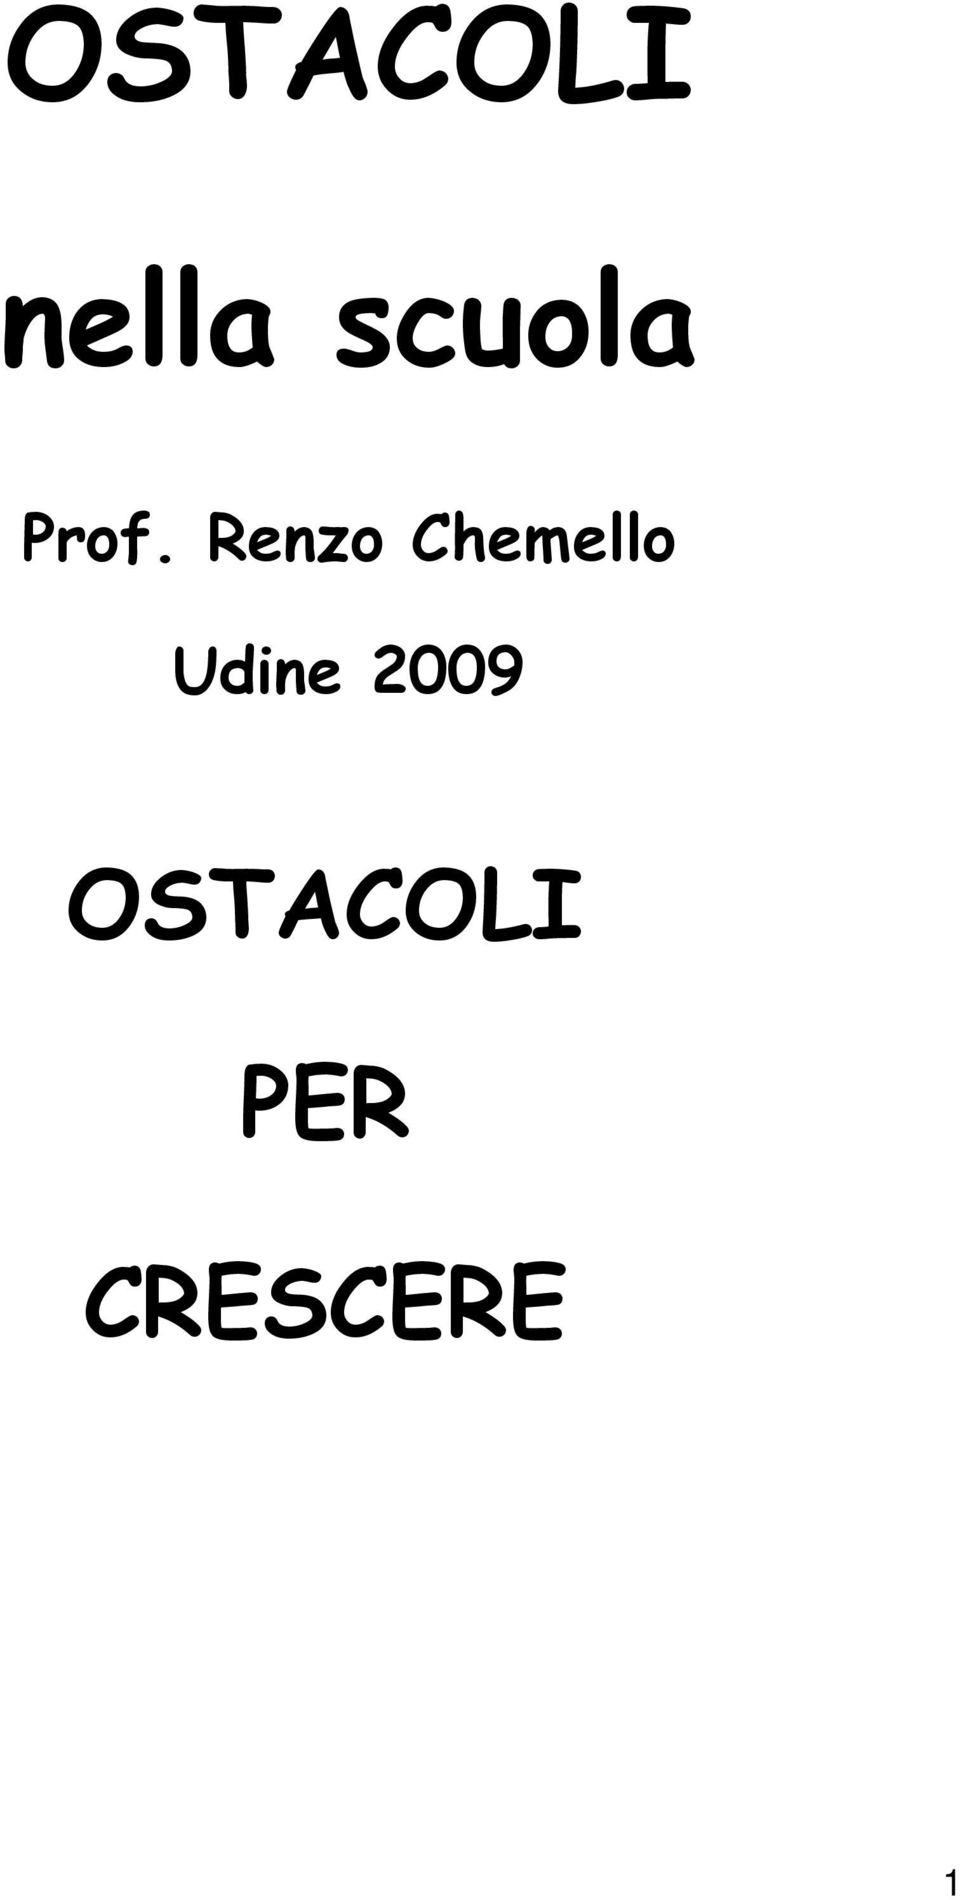 Renzo Chemello